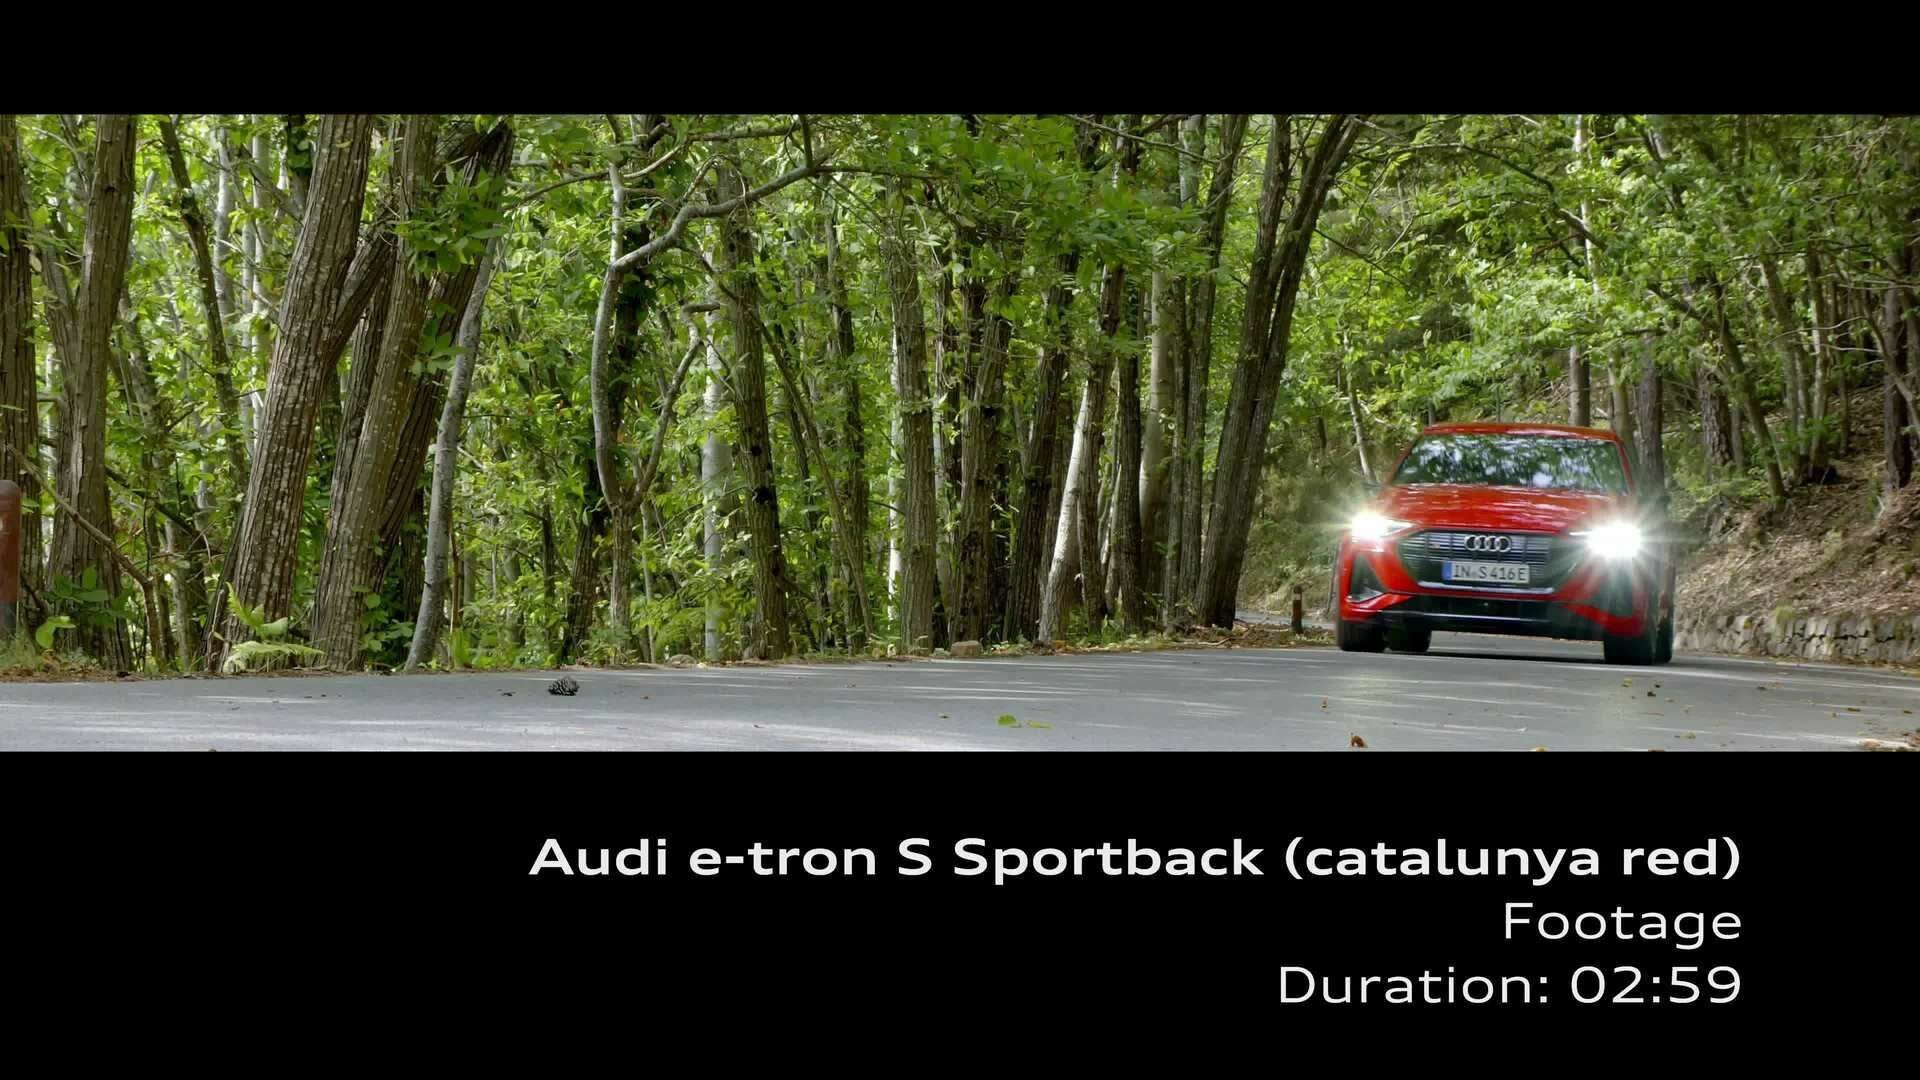 Footage: Audi e-tron S Sportback Catalunyarot